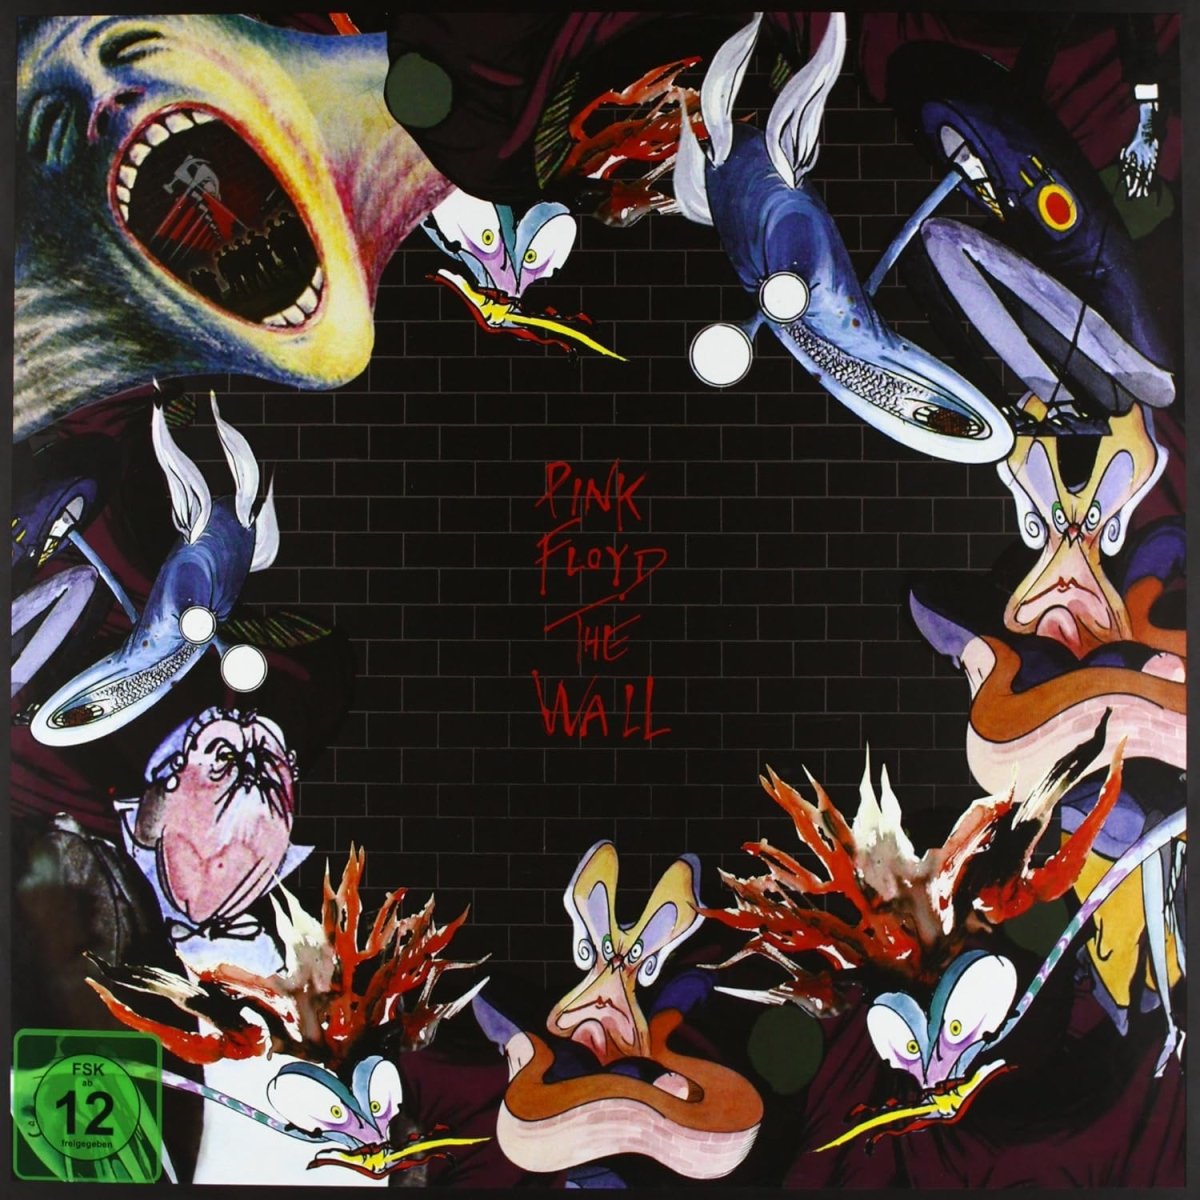 Pink Floyd - The Wall - Immersion Box Set CD Box Set Vinyl